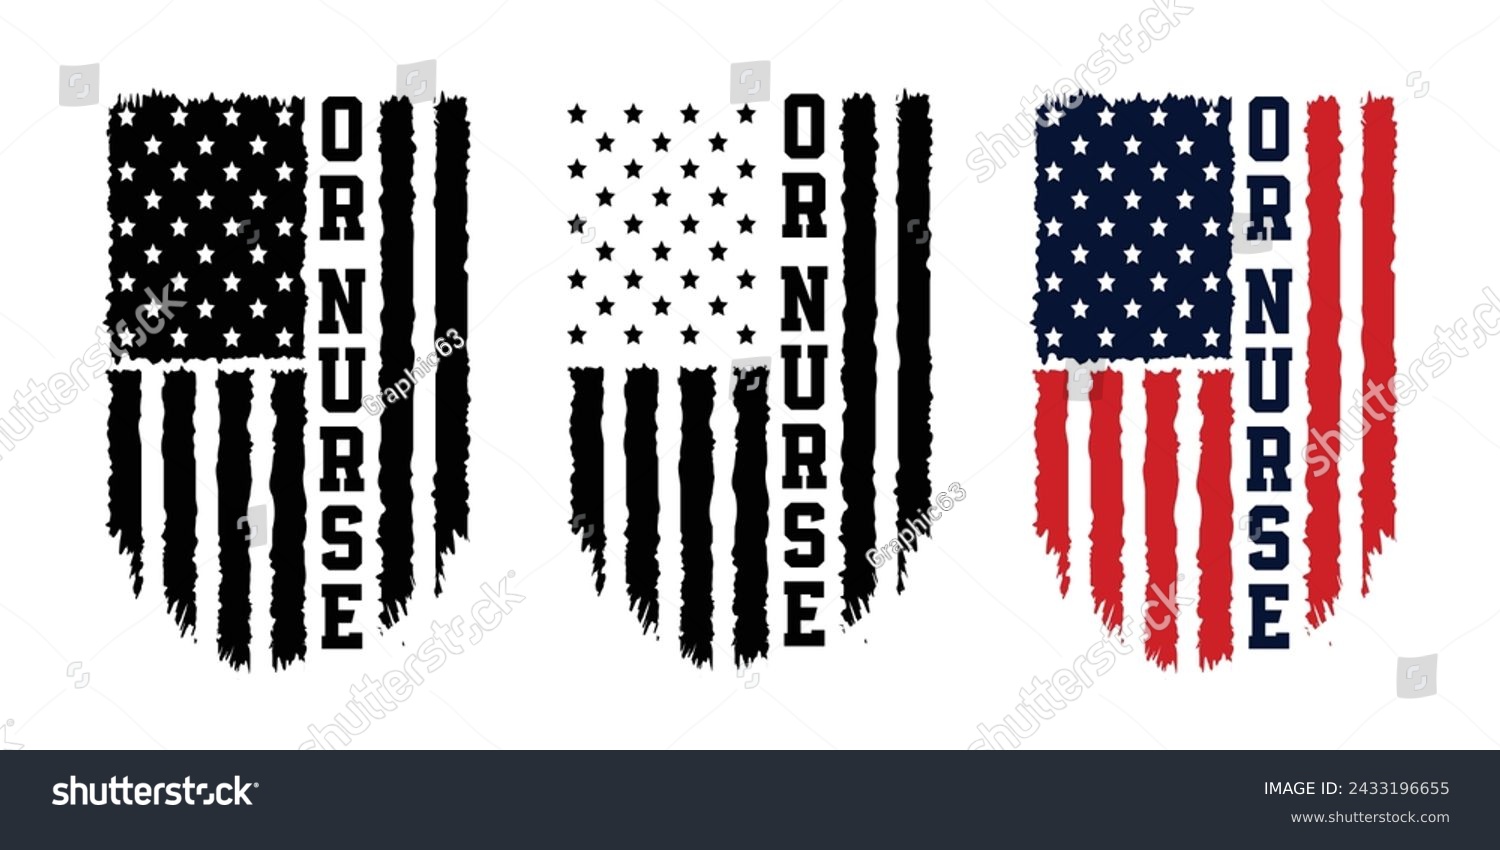 SVG of Or Nurse Typography Vector. Nurse Distressed American Flag Print For t Shirt,Poster,backround,Banner New Design. svg